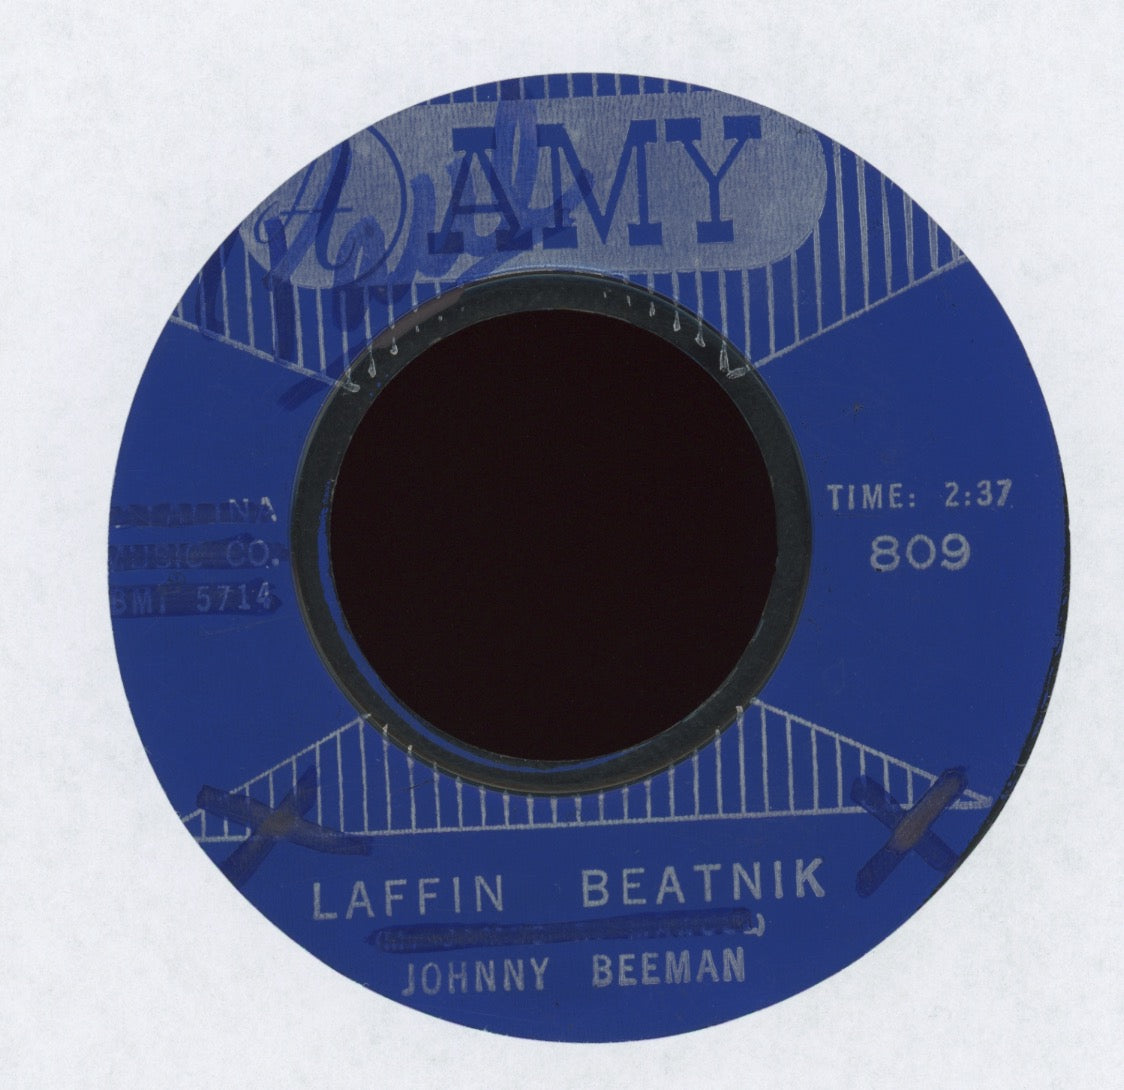 Johnny Beeman - Rockin' Beatnik on Amy